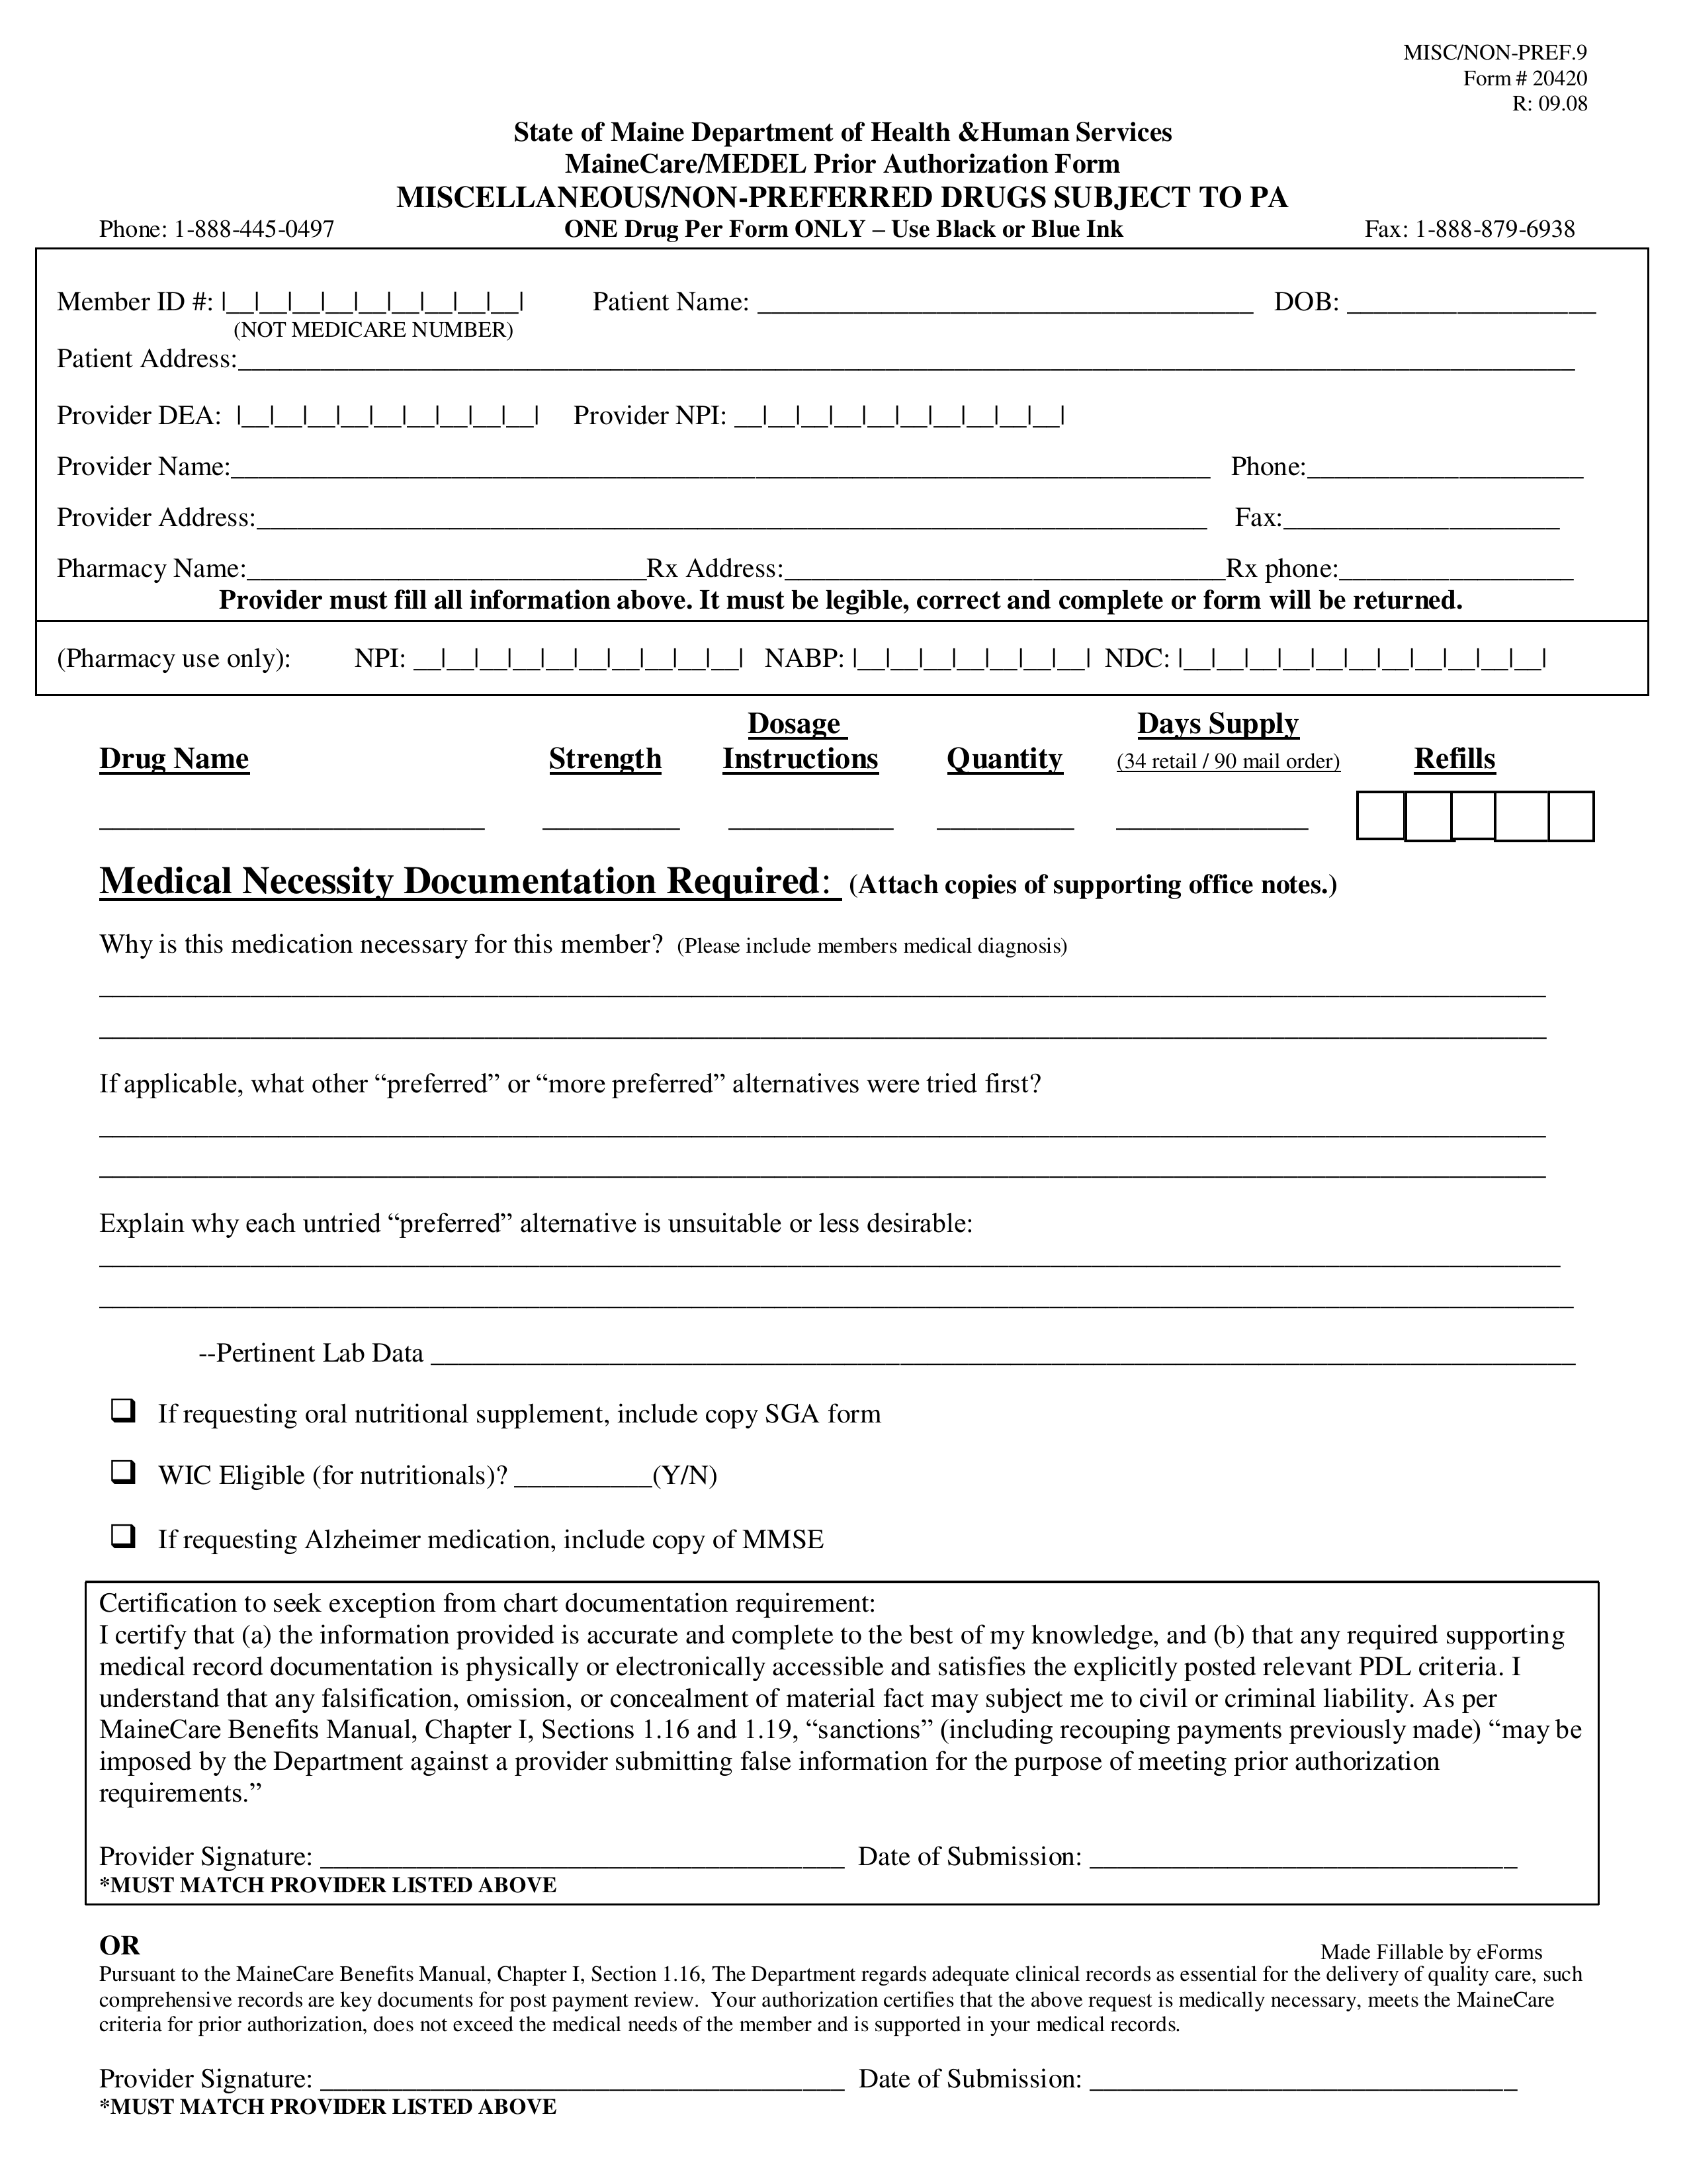 Maine Medicaid Prior (Rx) Authorization Form